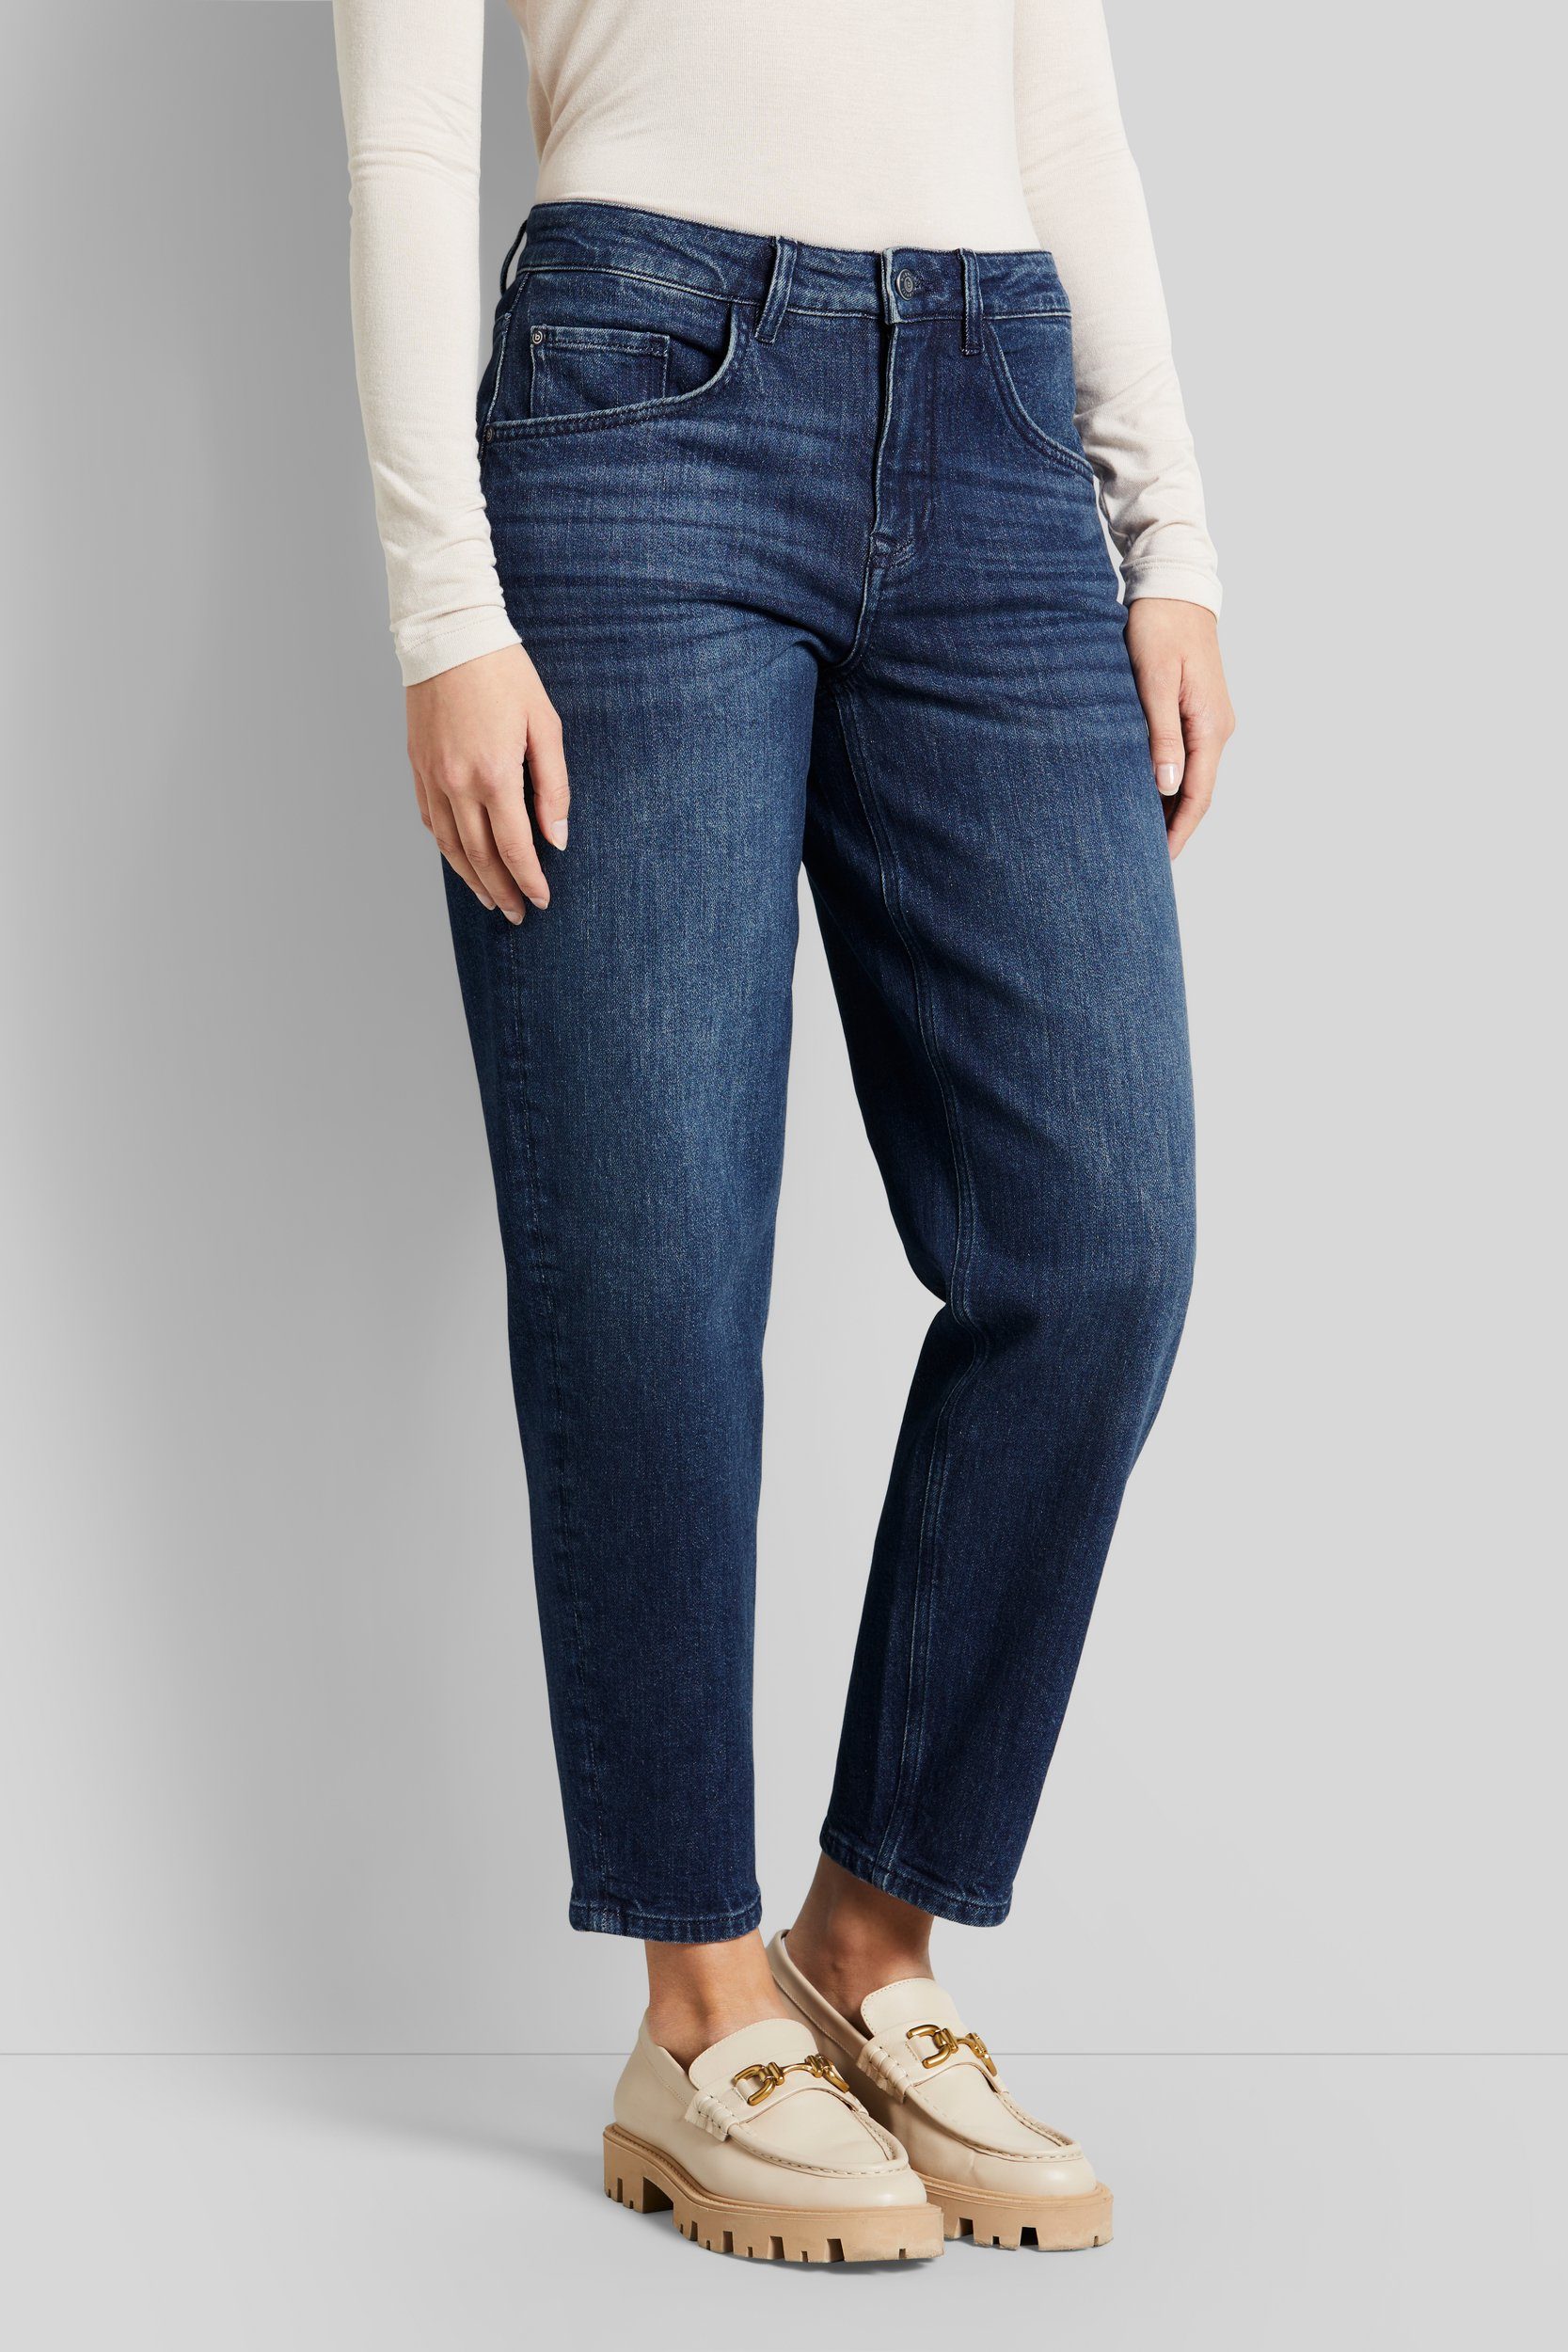 lockerem 5-Pocket-Jeans mit Schnitt bugatti